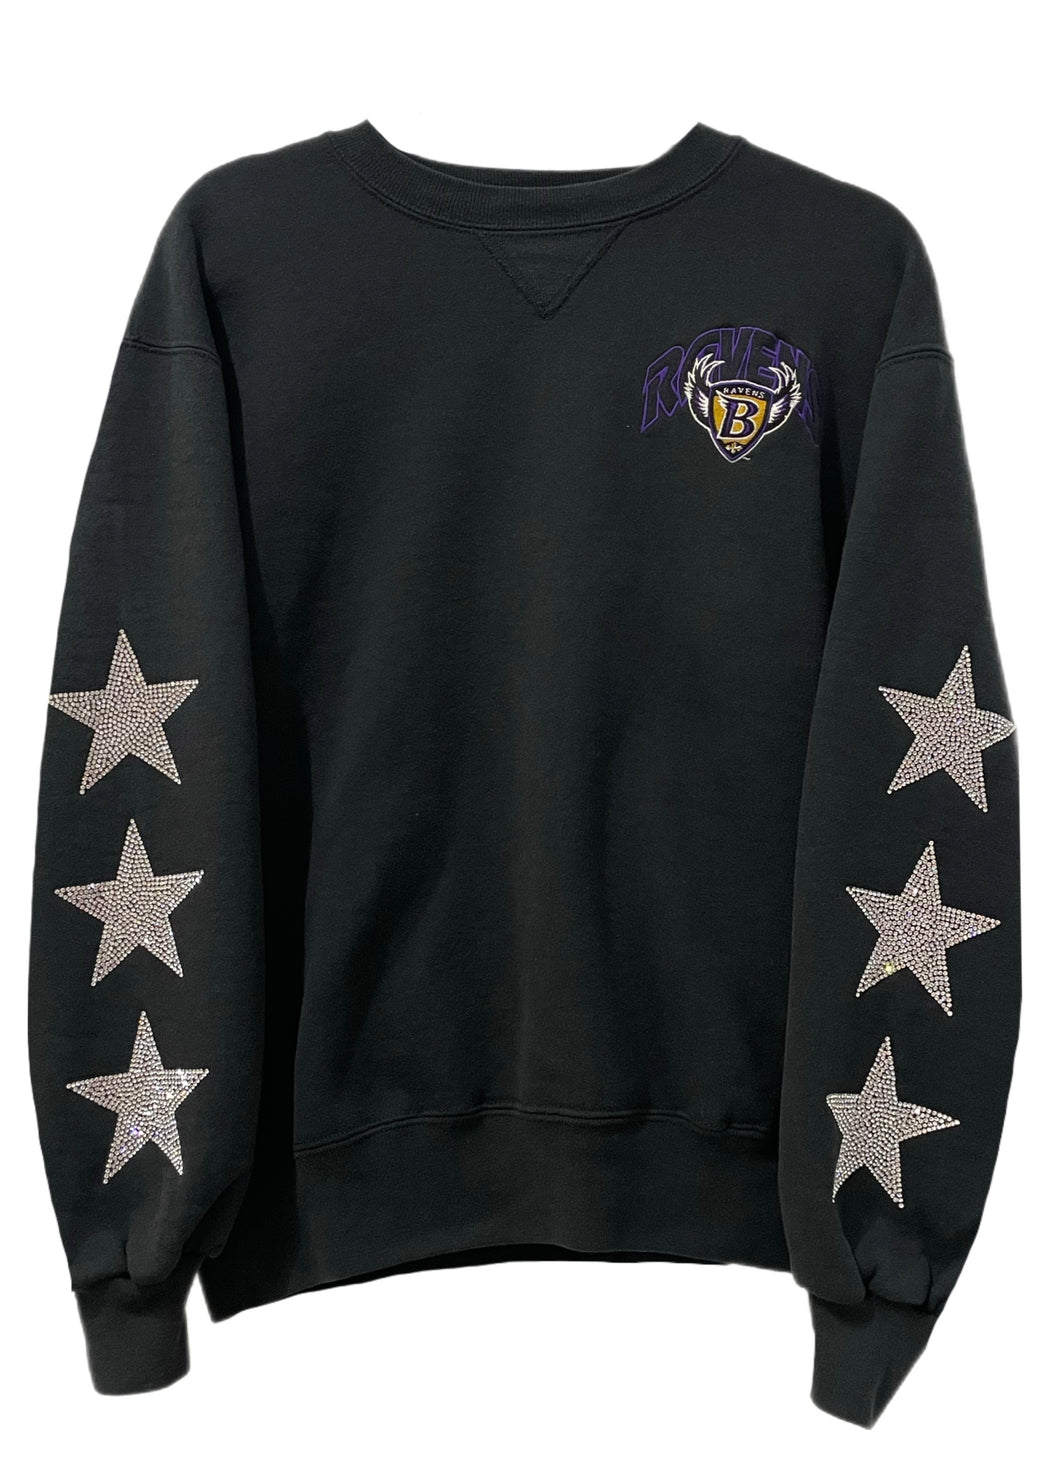 Baltimore Ravens, NFL One of a KIND Vintage Sweatshirt with Three Crystal Star Design